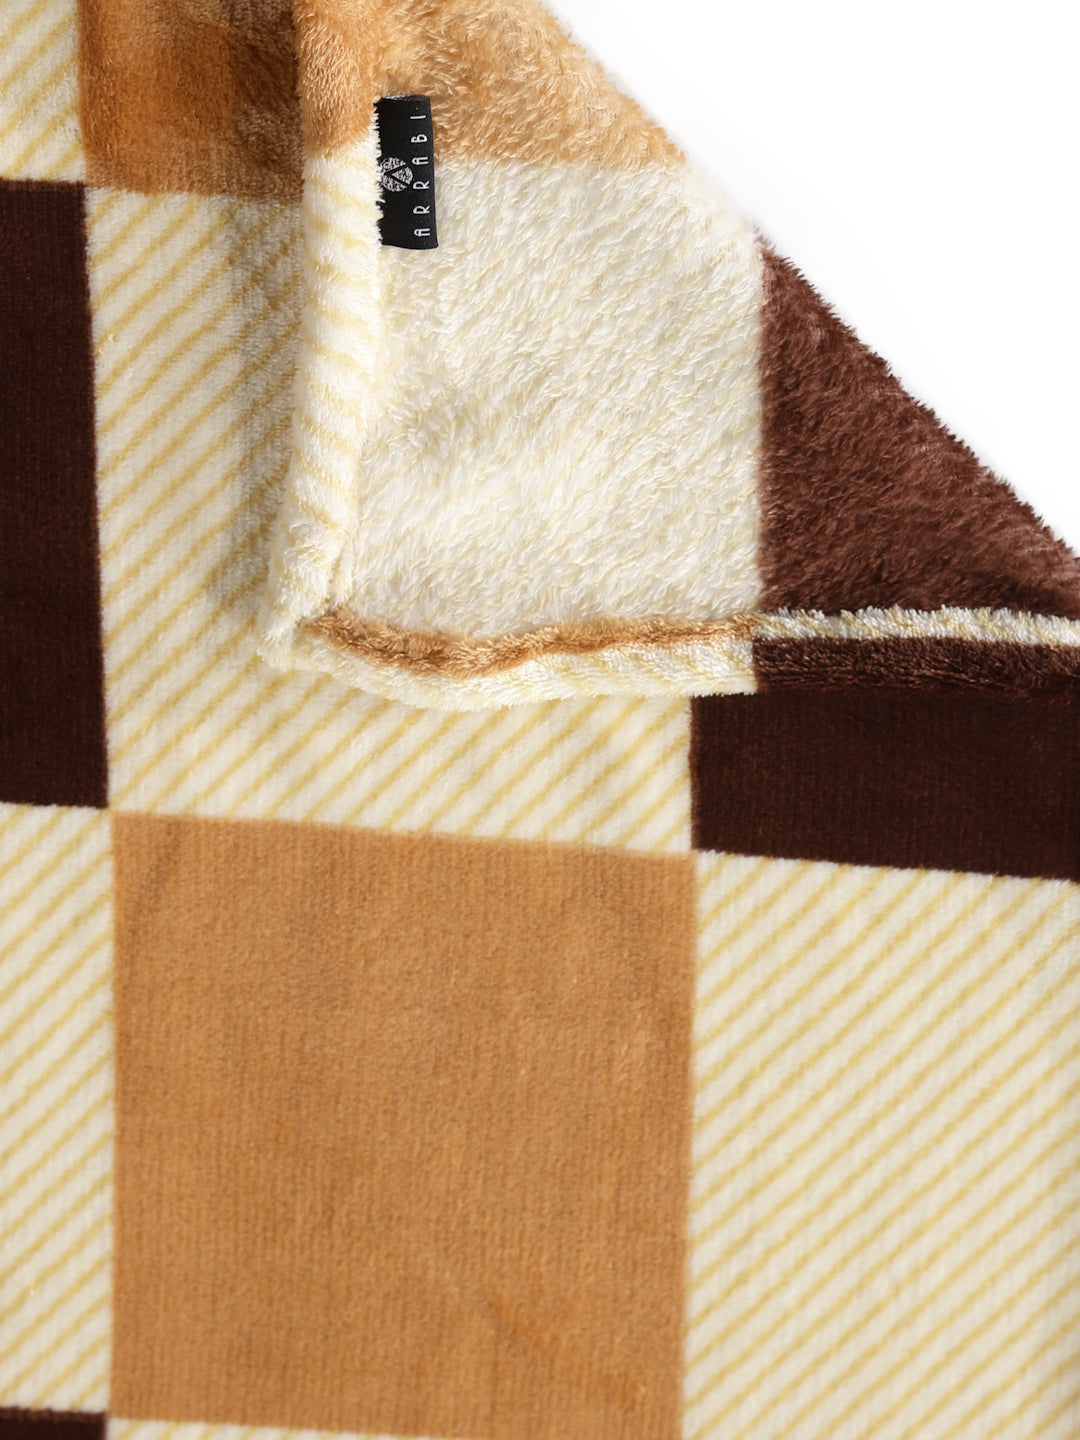 ARRABI® King Size Winter Woolen Bedsheet with 2 Pillow Covers (235 X 215 cm)